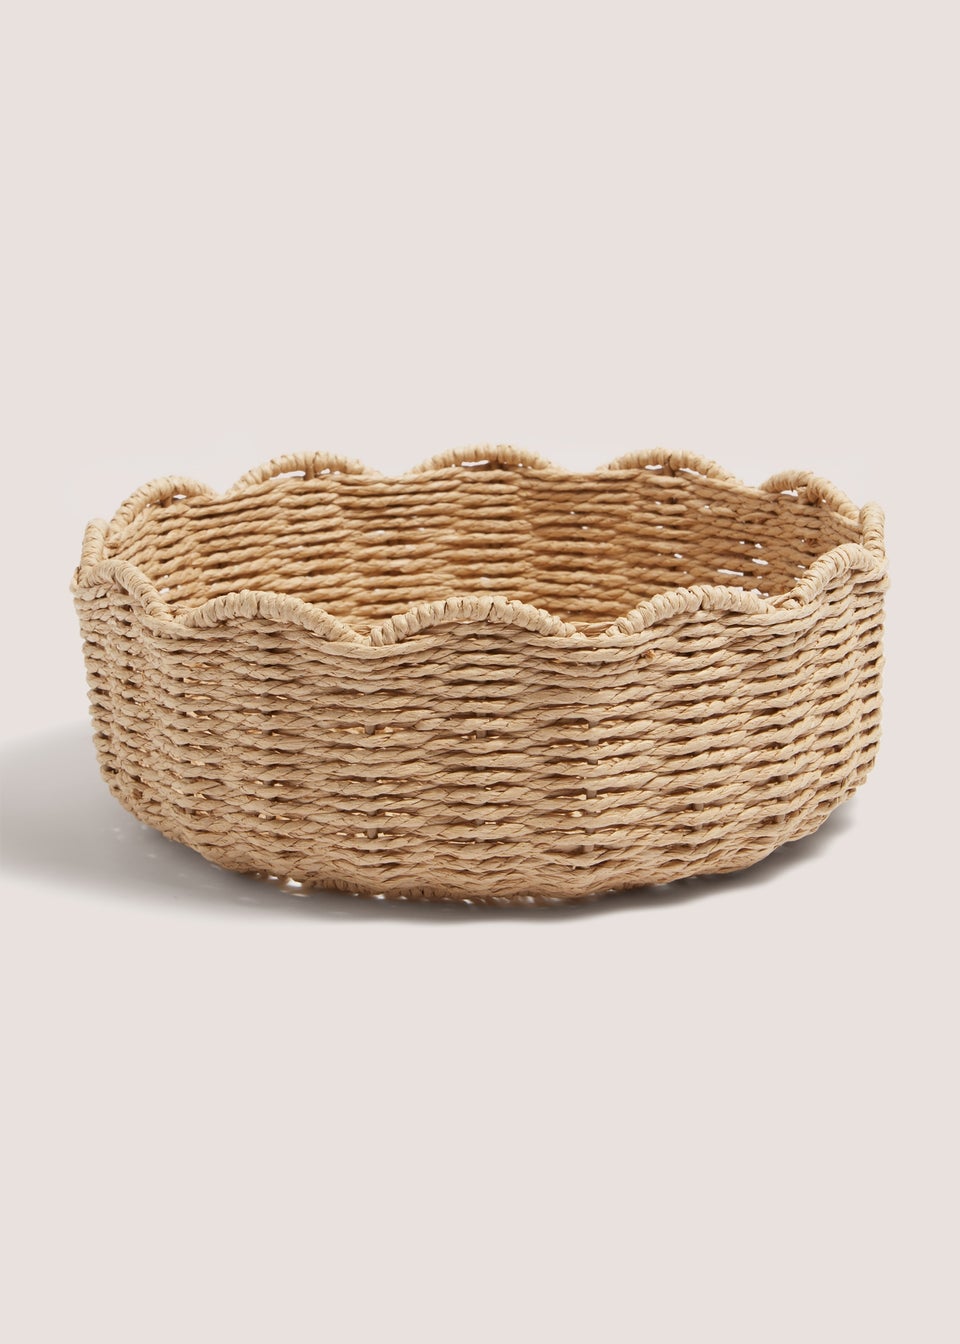 Retreat Scalloped Basket (27cm x 10cm)